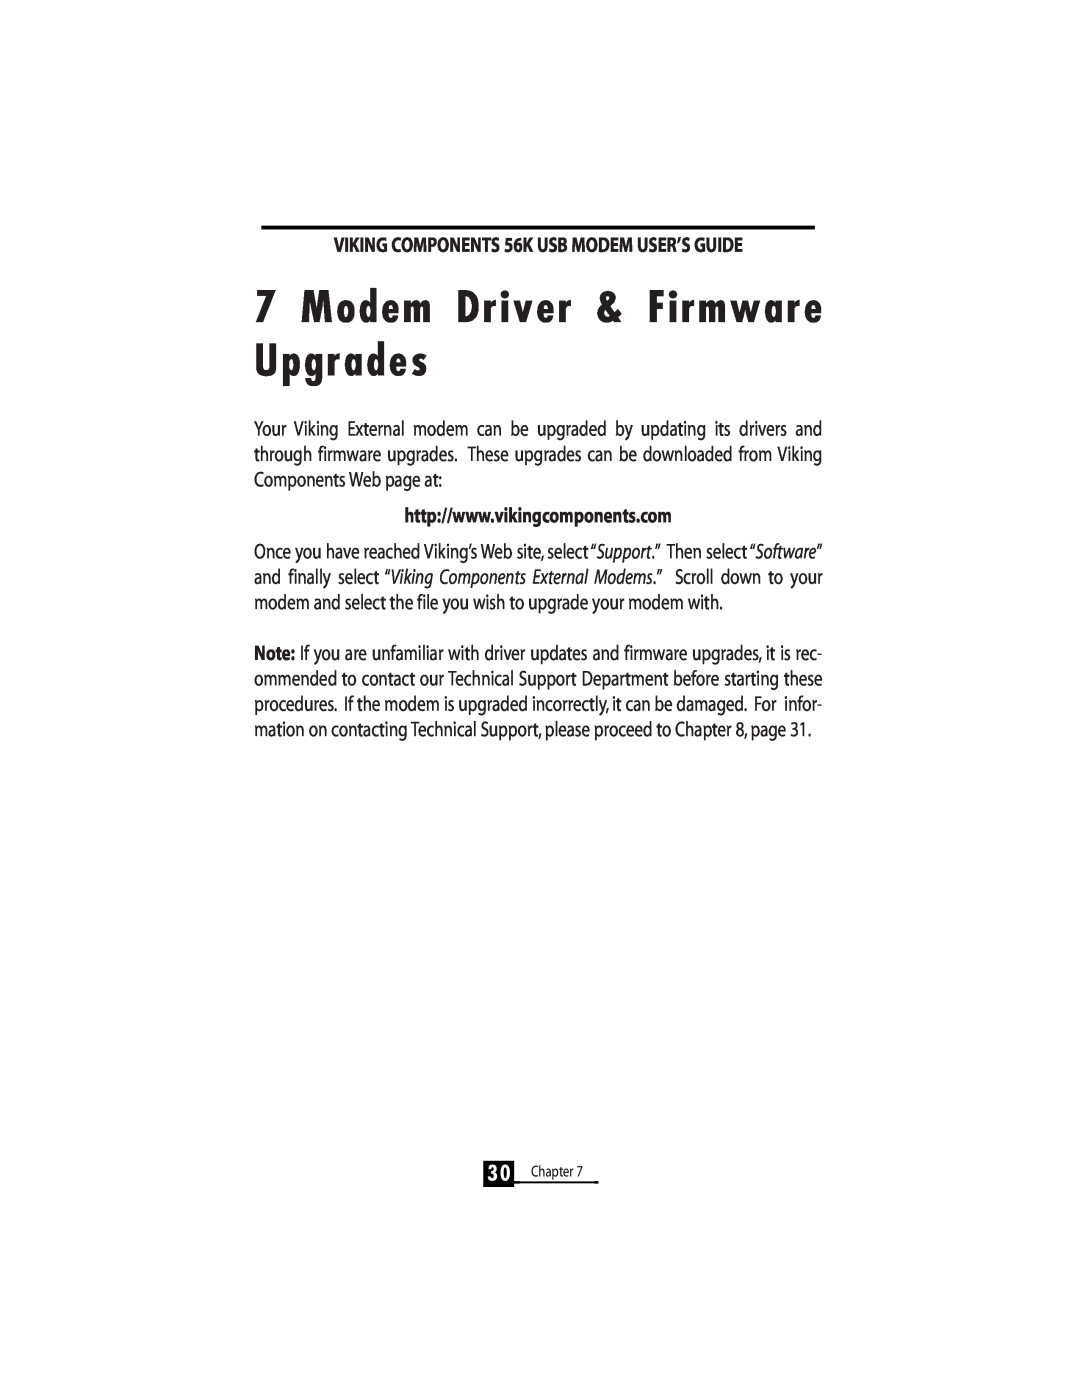 Viking InterWorks 56K manual Modem Driver & Firmware Upgrades 